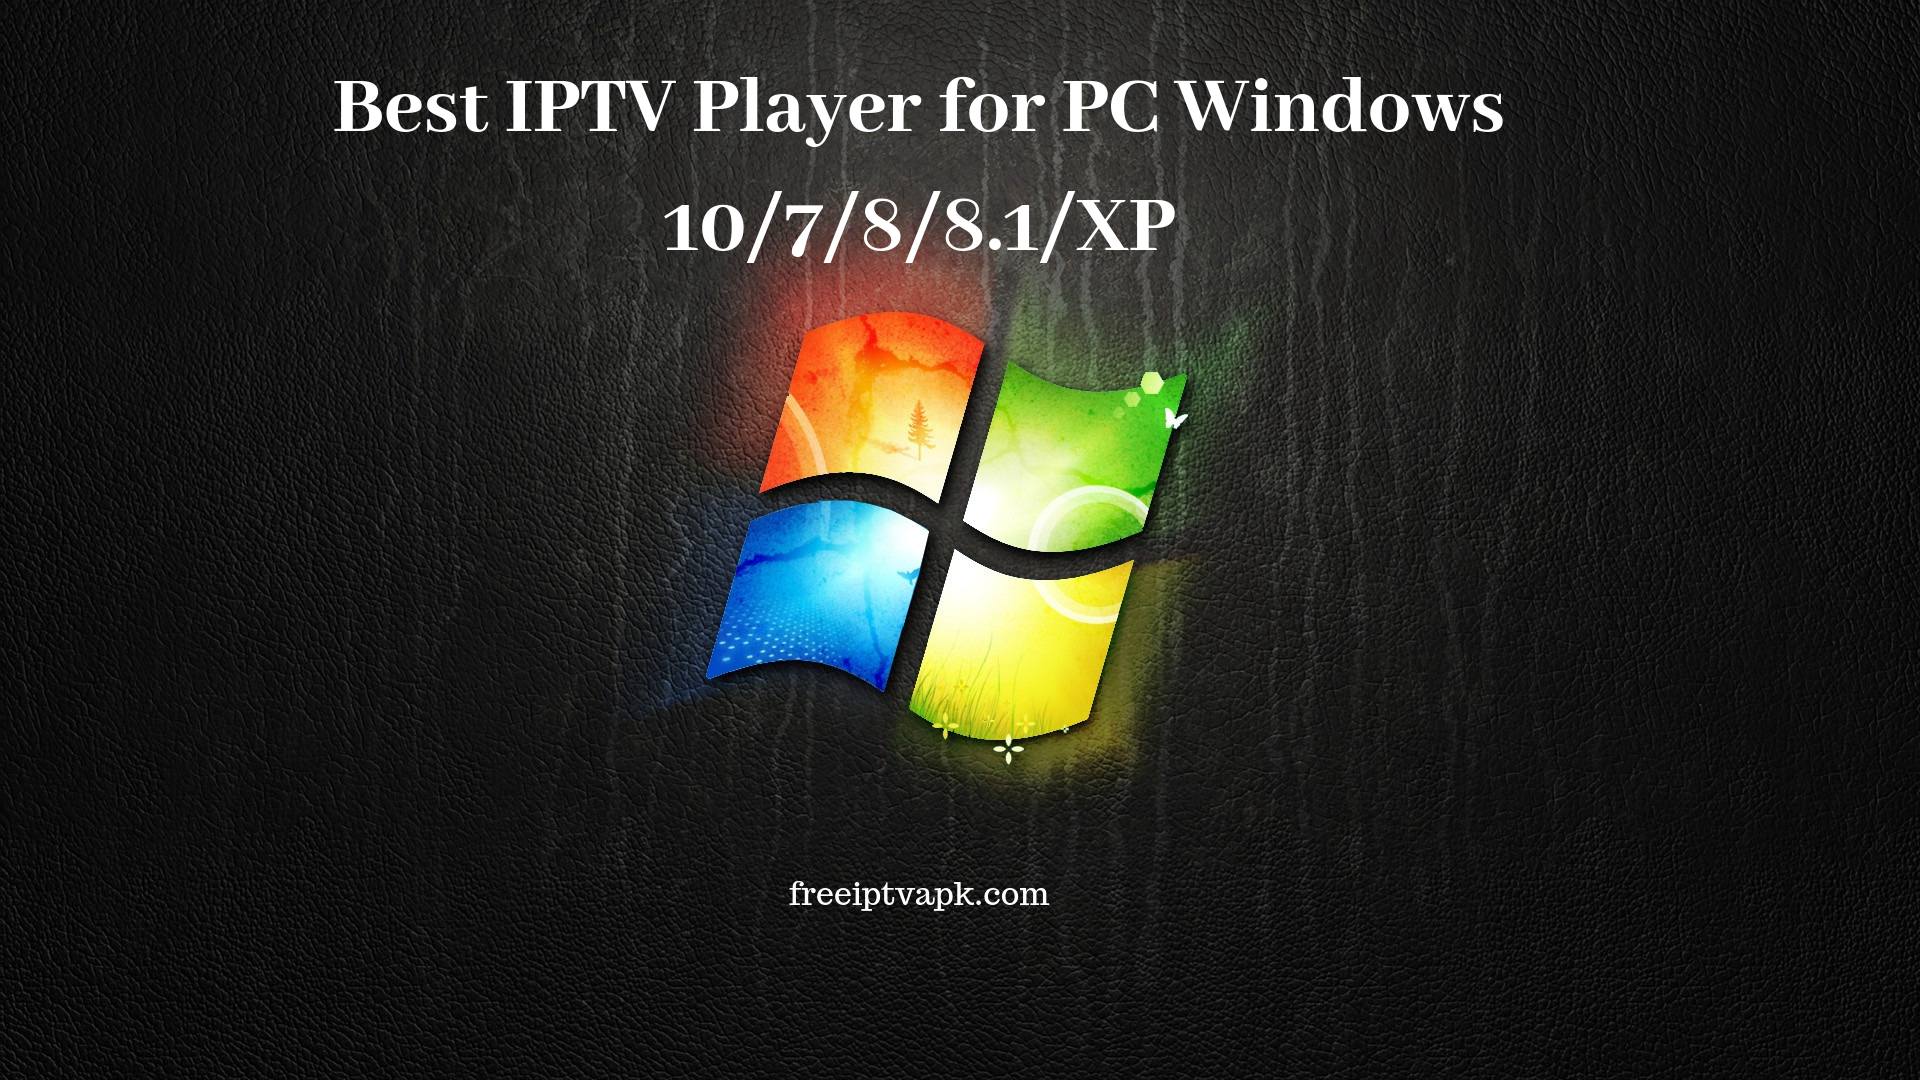 iptv player windows 10 download free